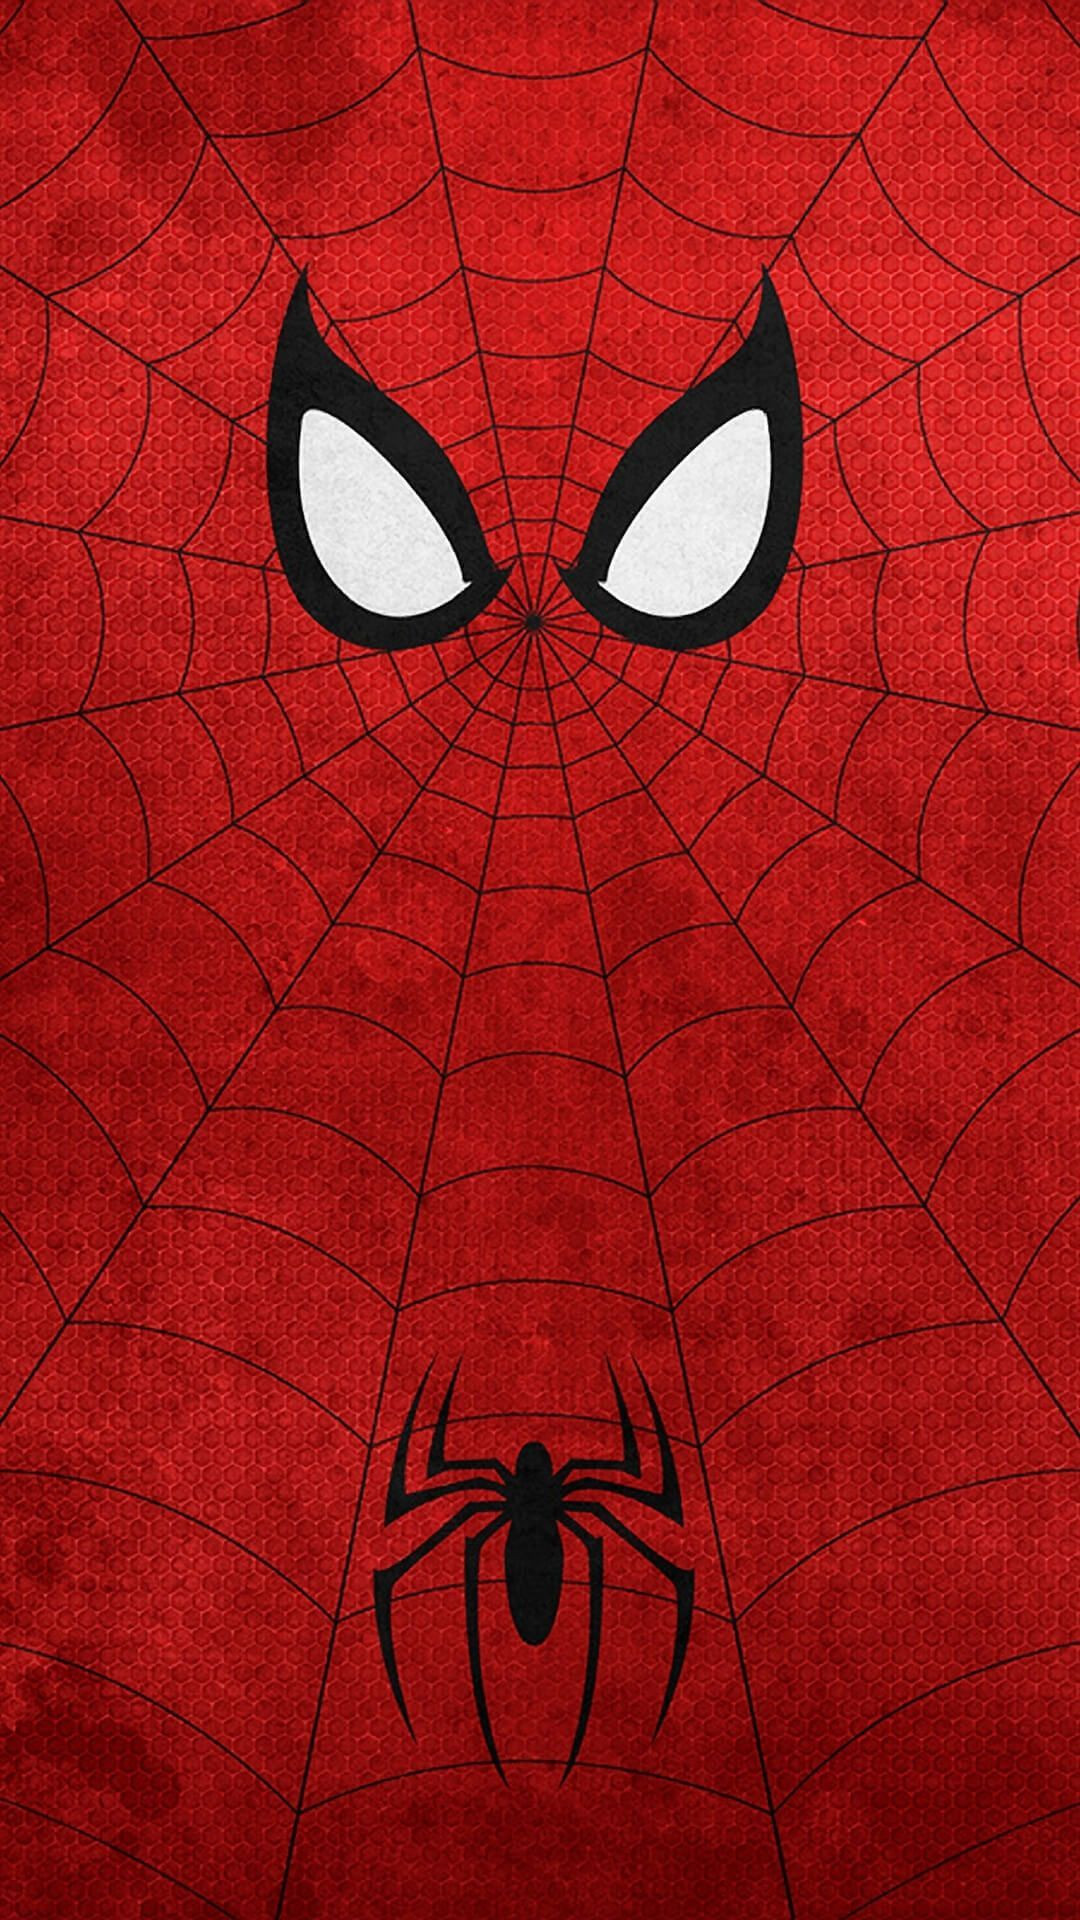 1080x1920 Spiderman Wallpaper Phone Awesome Spiderman Wallpaper Fond Ecran iPhone  Retina 5